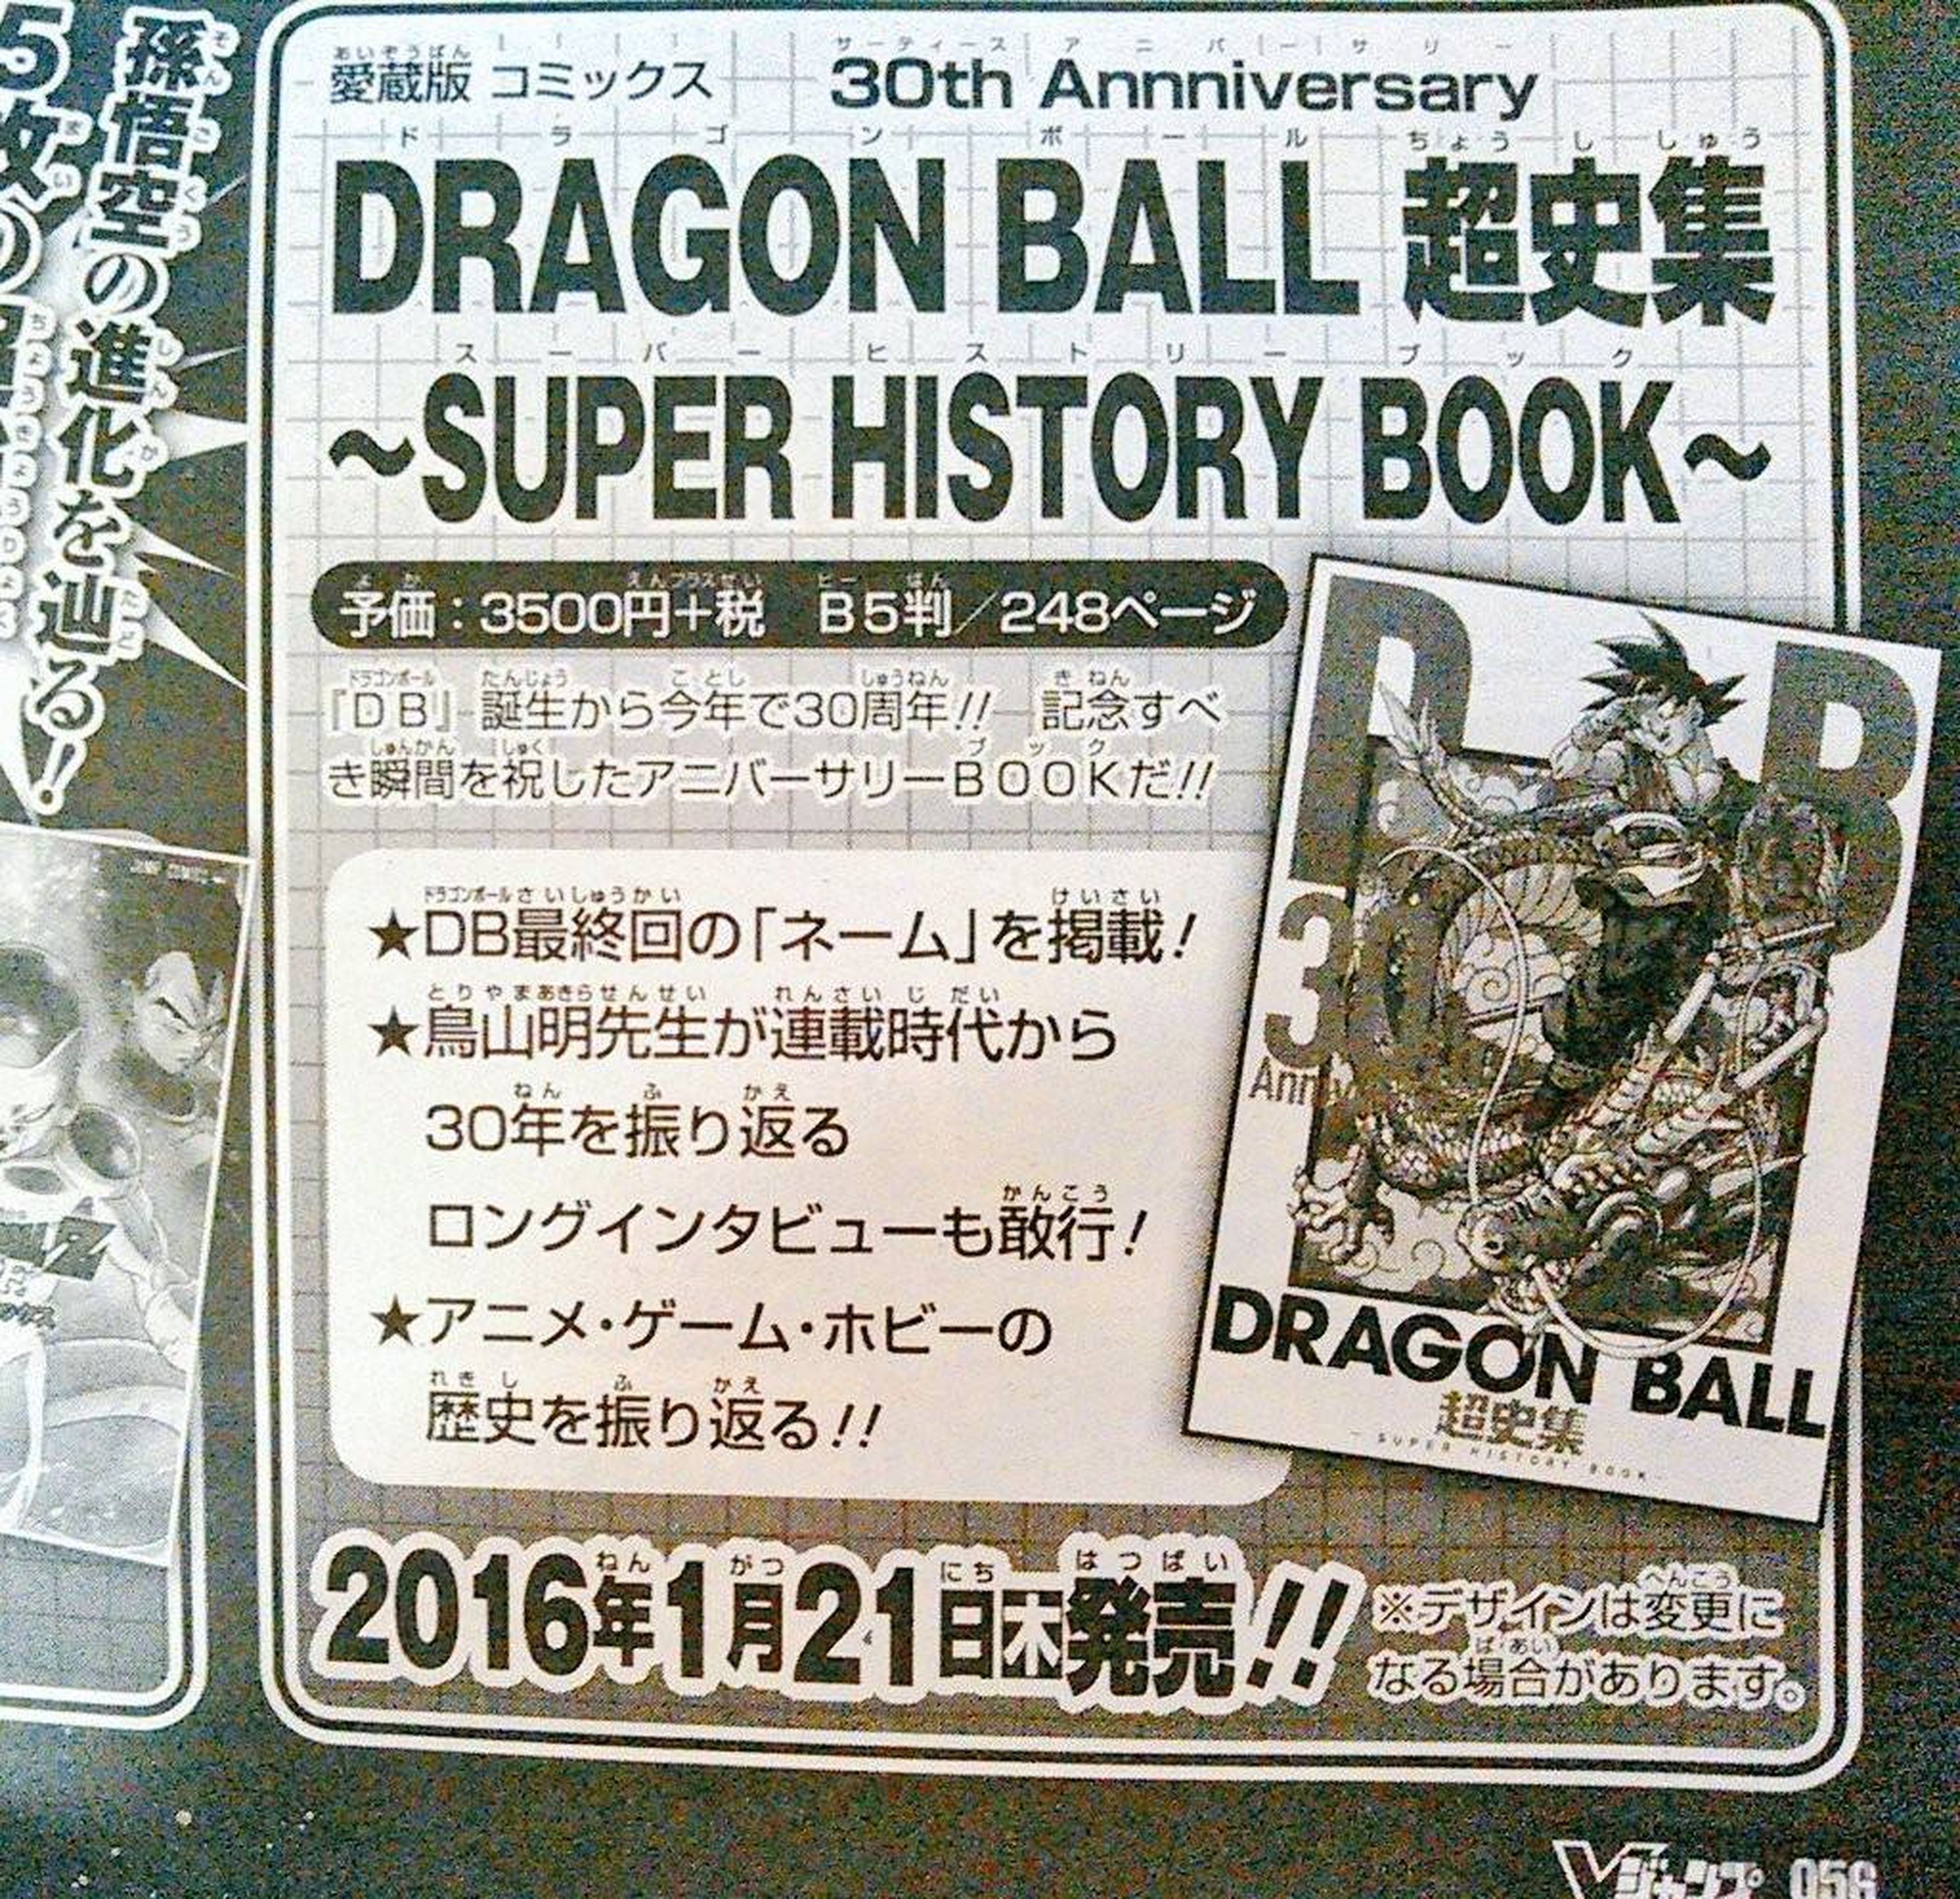 Dragon Ball: Super History Book, nuevo libro de la franquicia